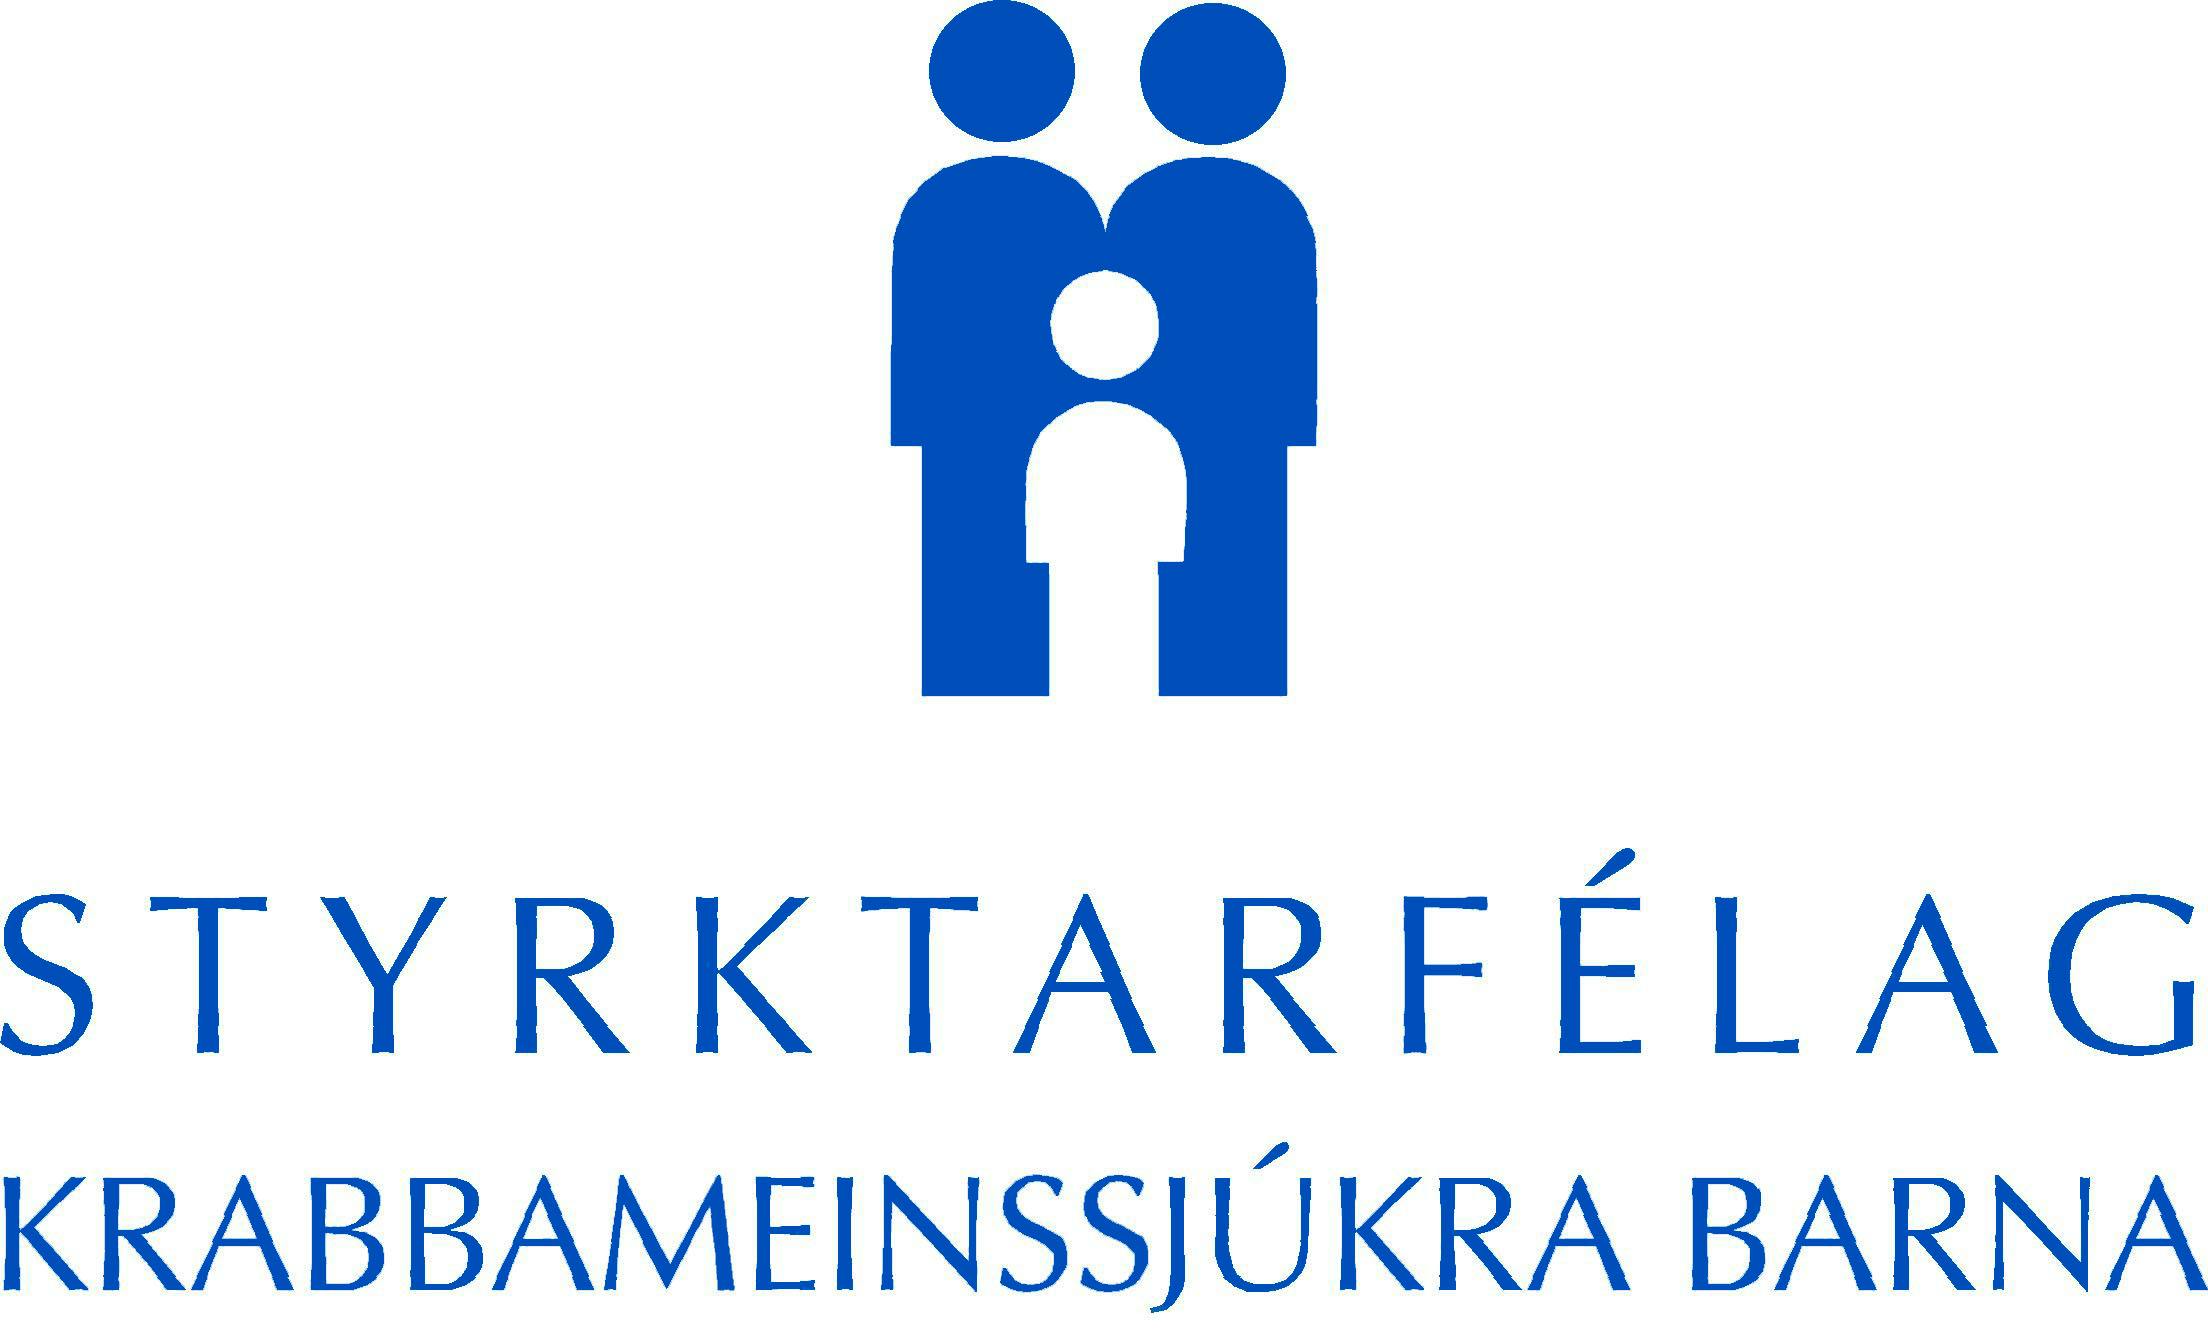 Icelandic Childhood Cancer Organization